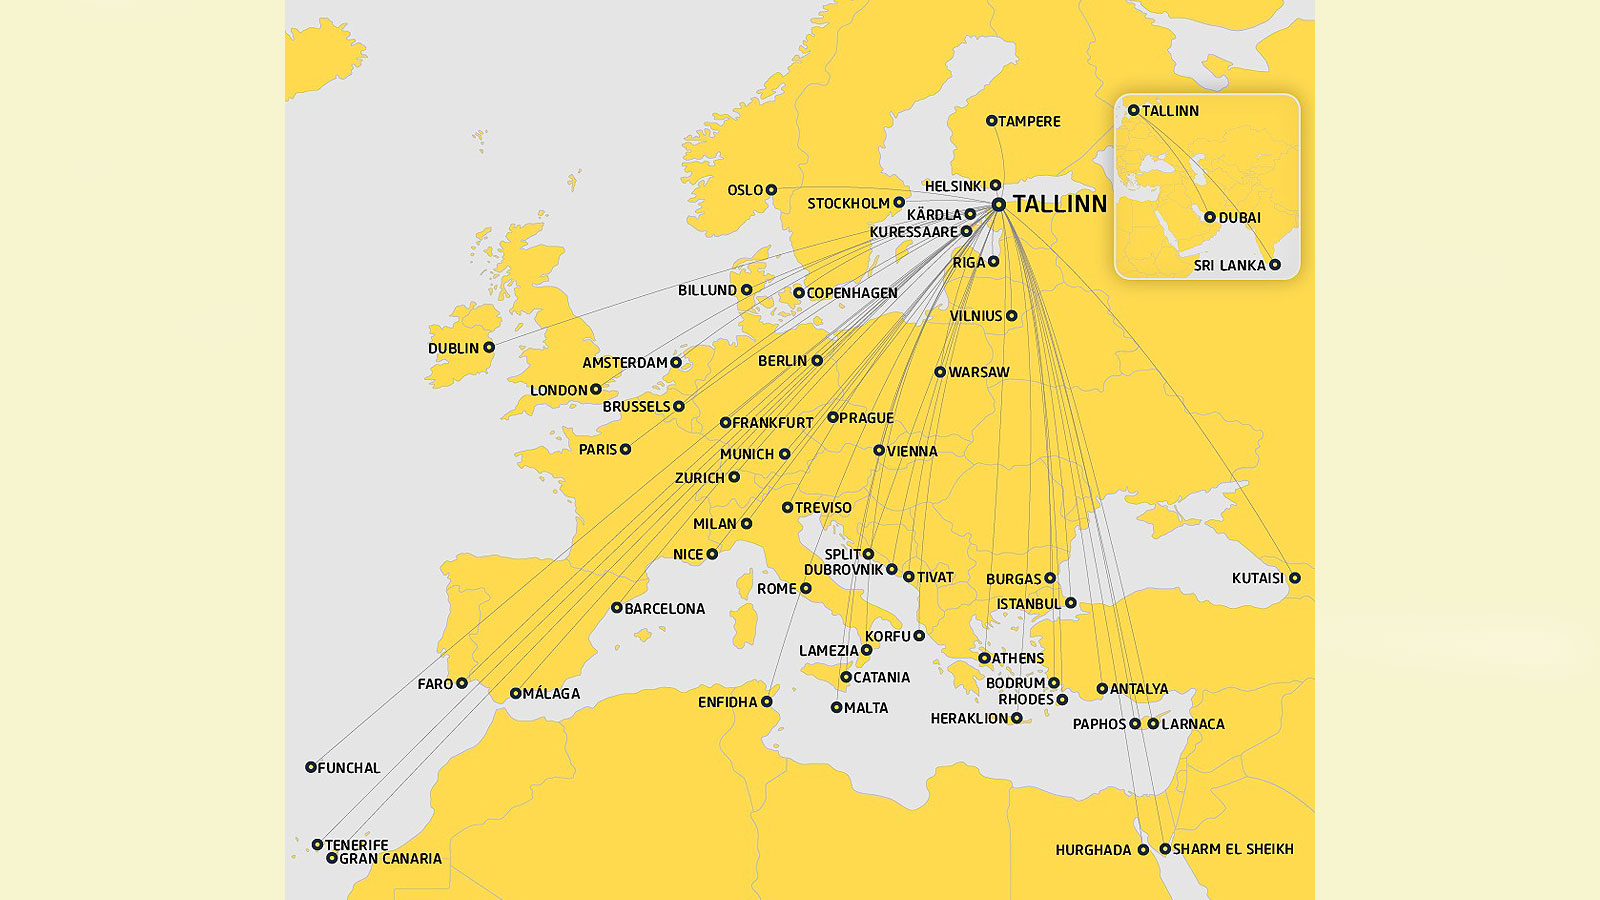 Tallinn Airport chart